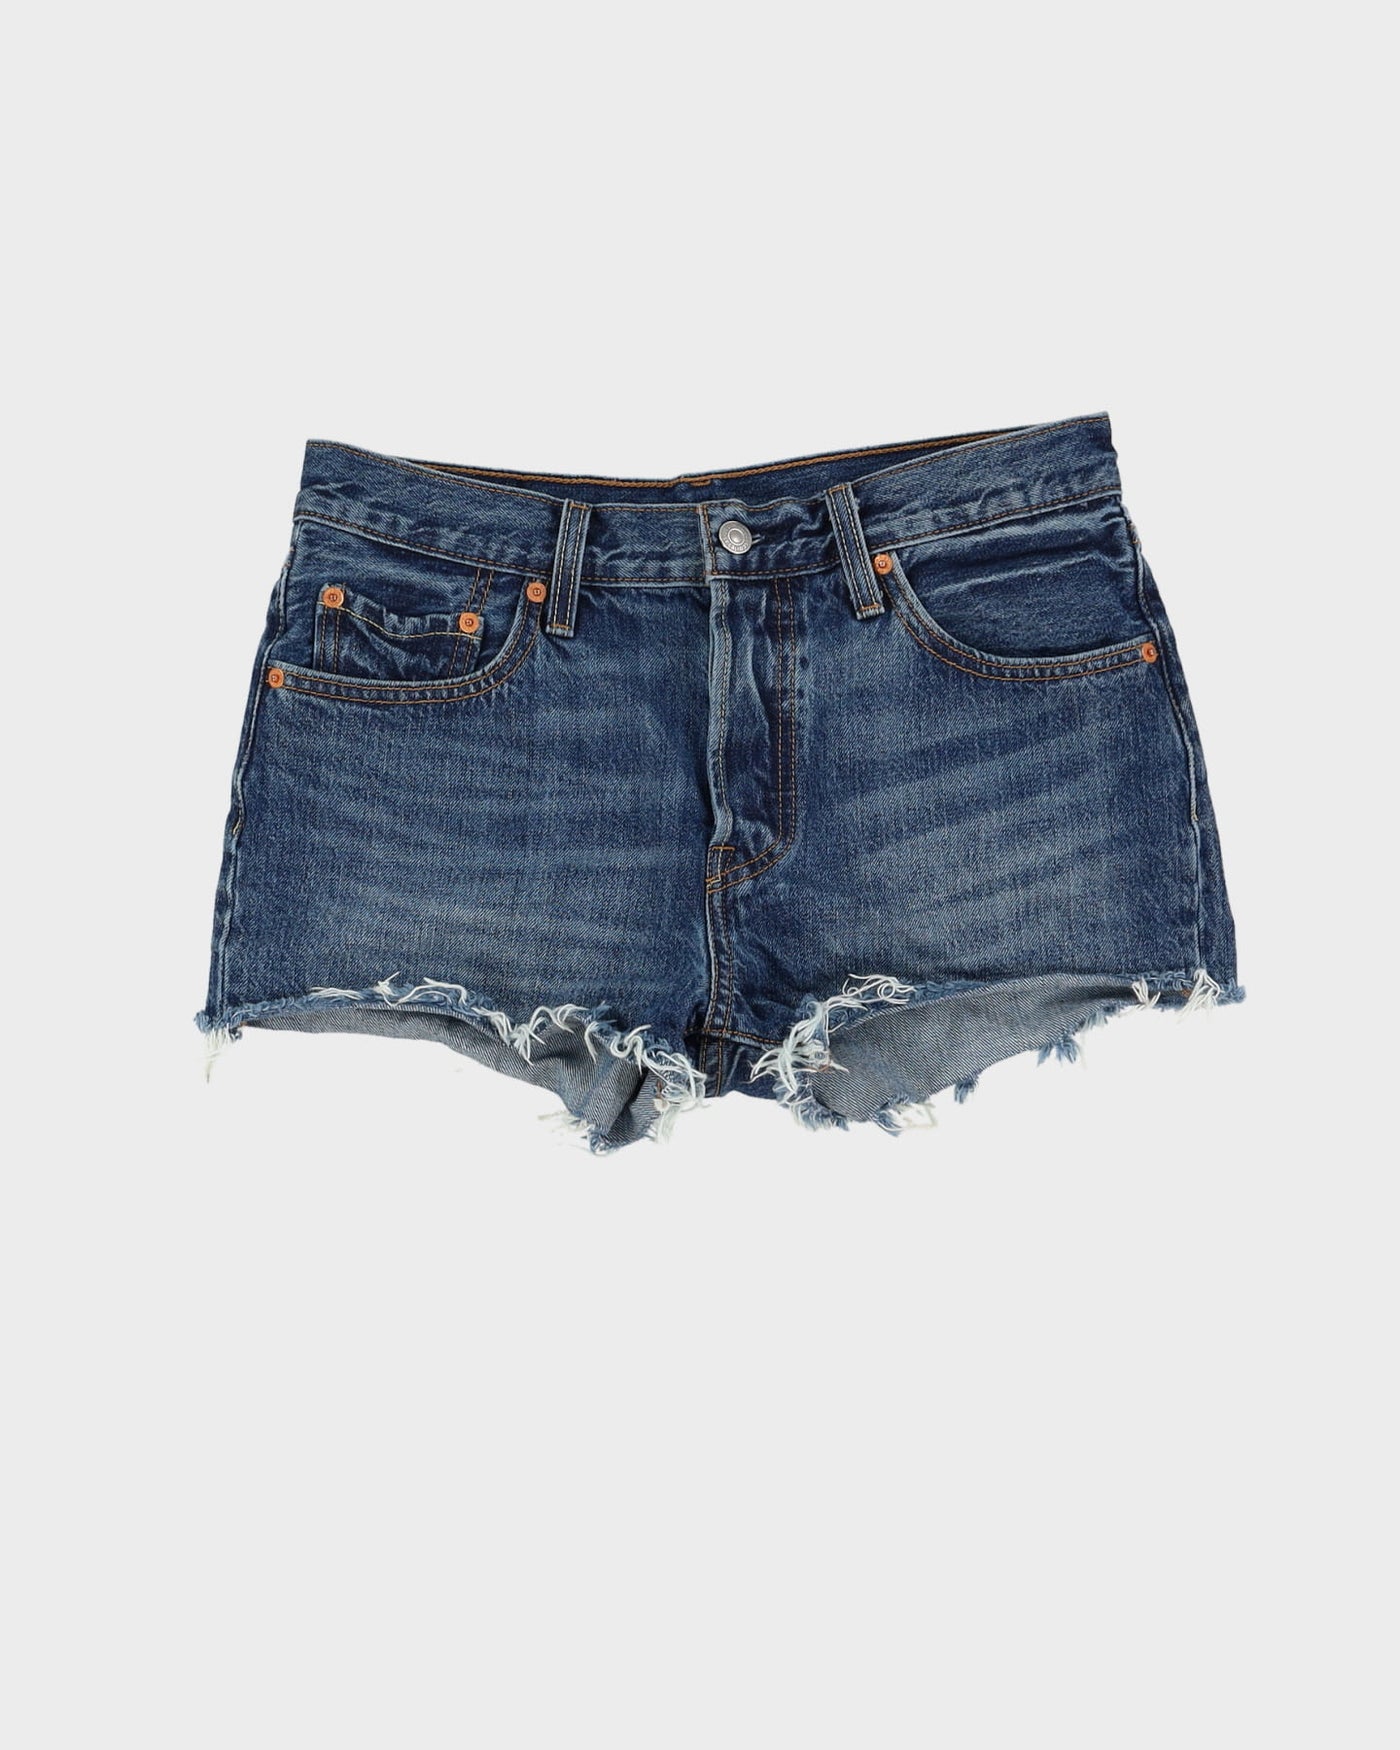 Levi's 501 Dark Blue Denim Shorts - W31